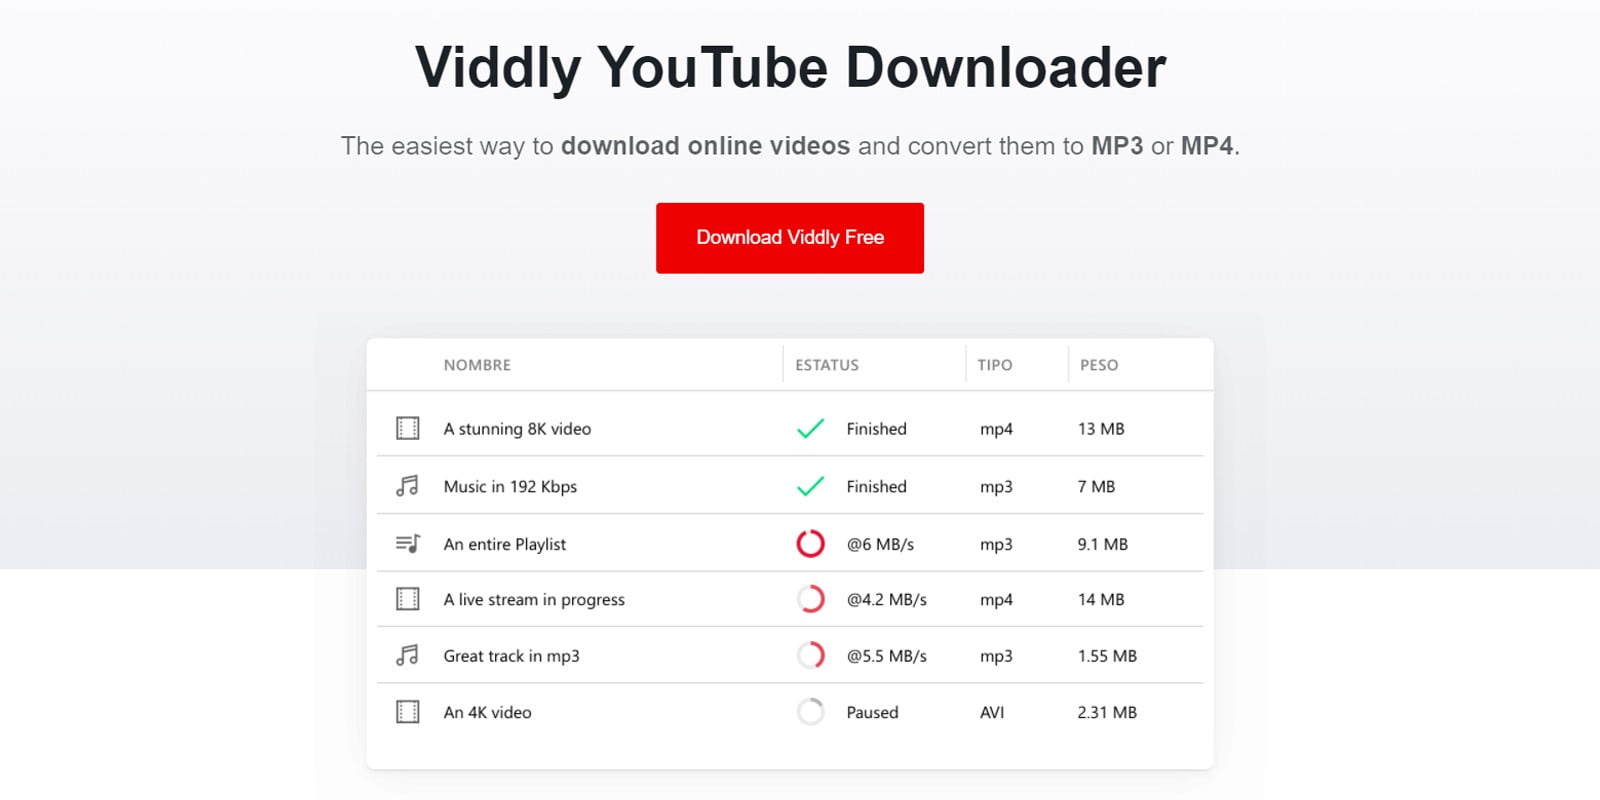 Viddly youtube downloader free download